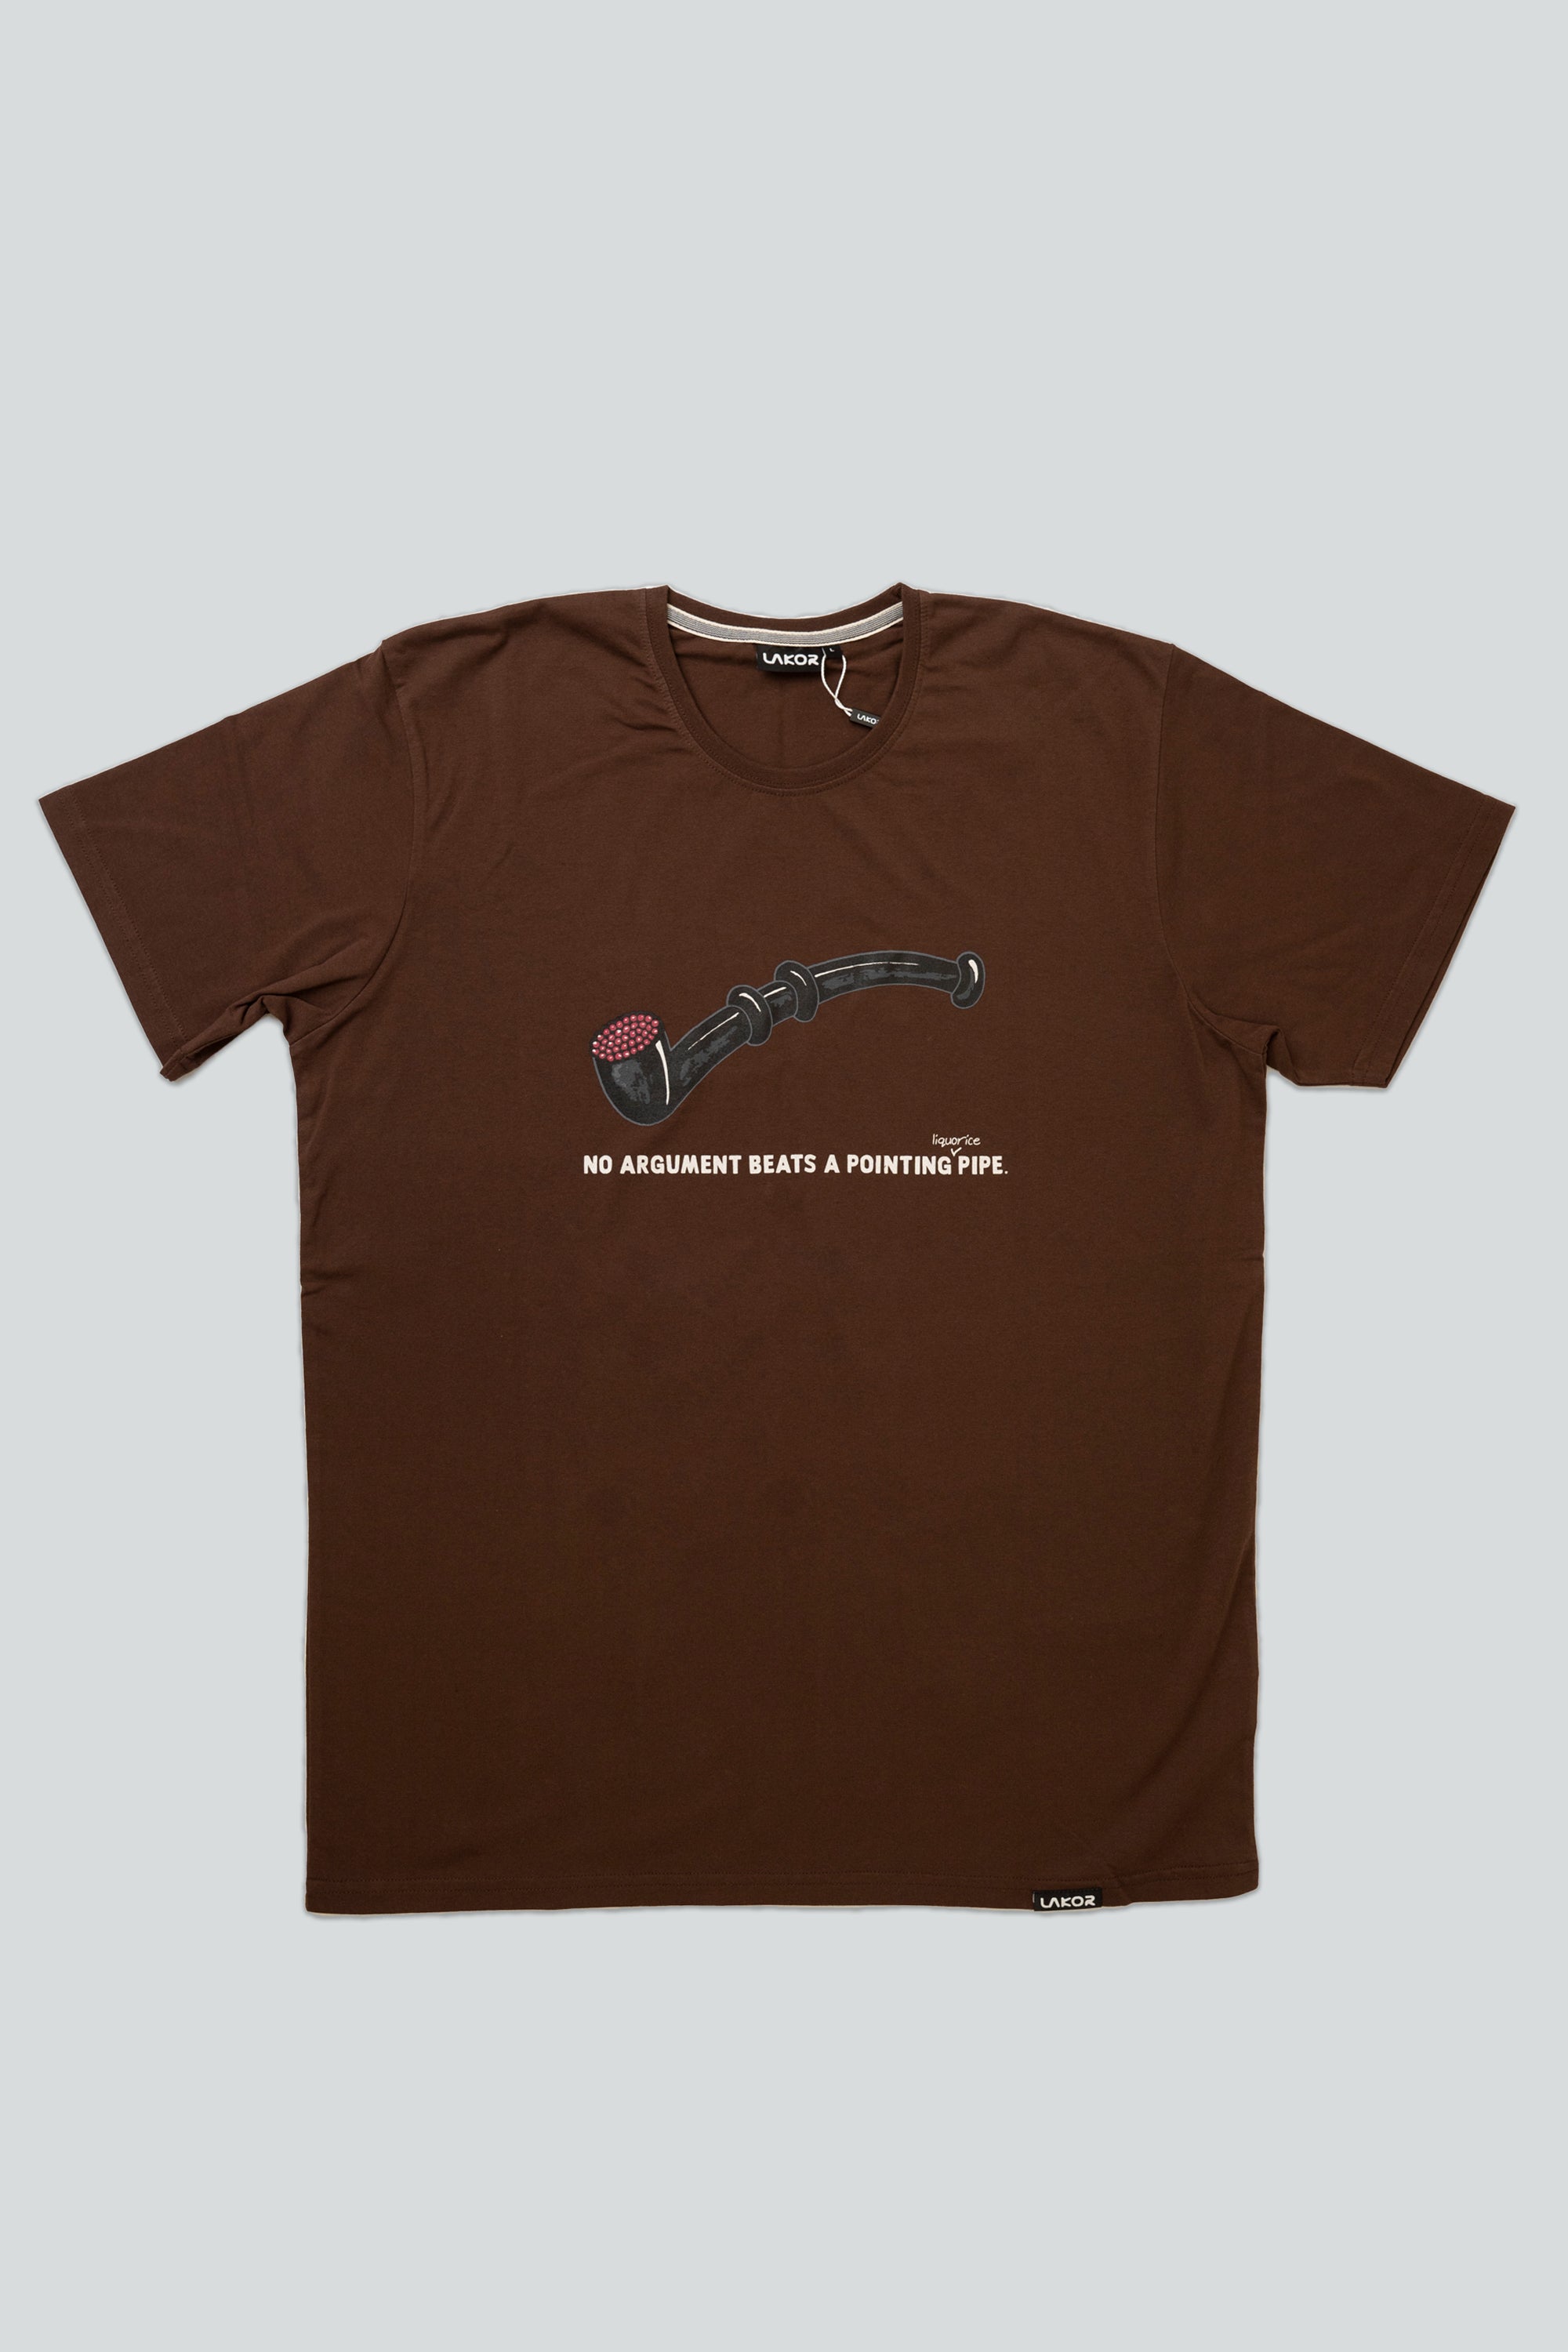 Lakridspibe T-shirt (Chicory Coffee)